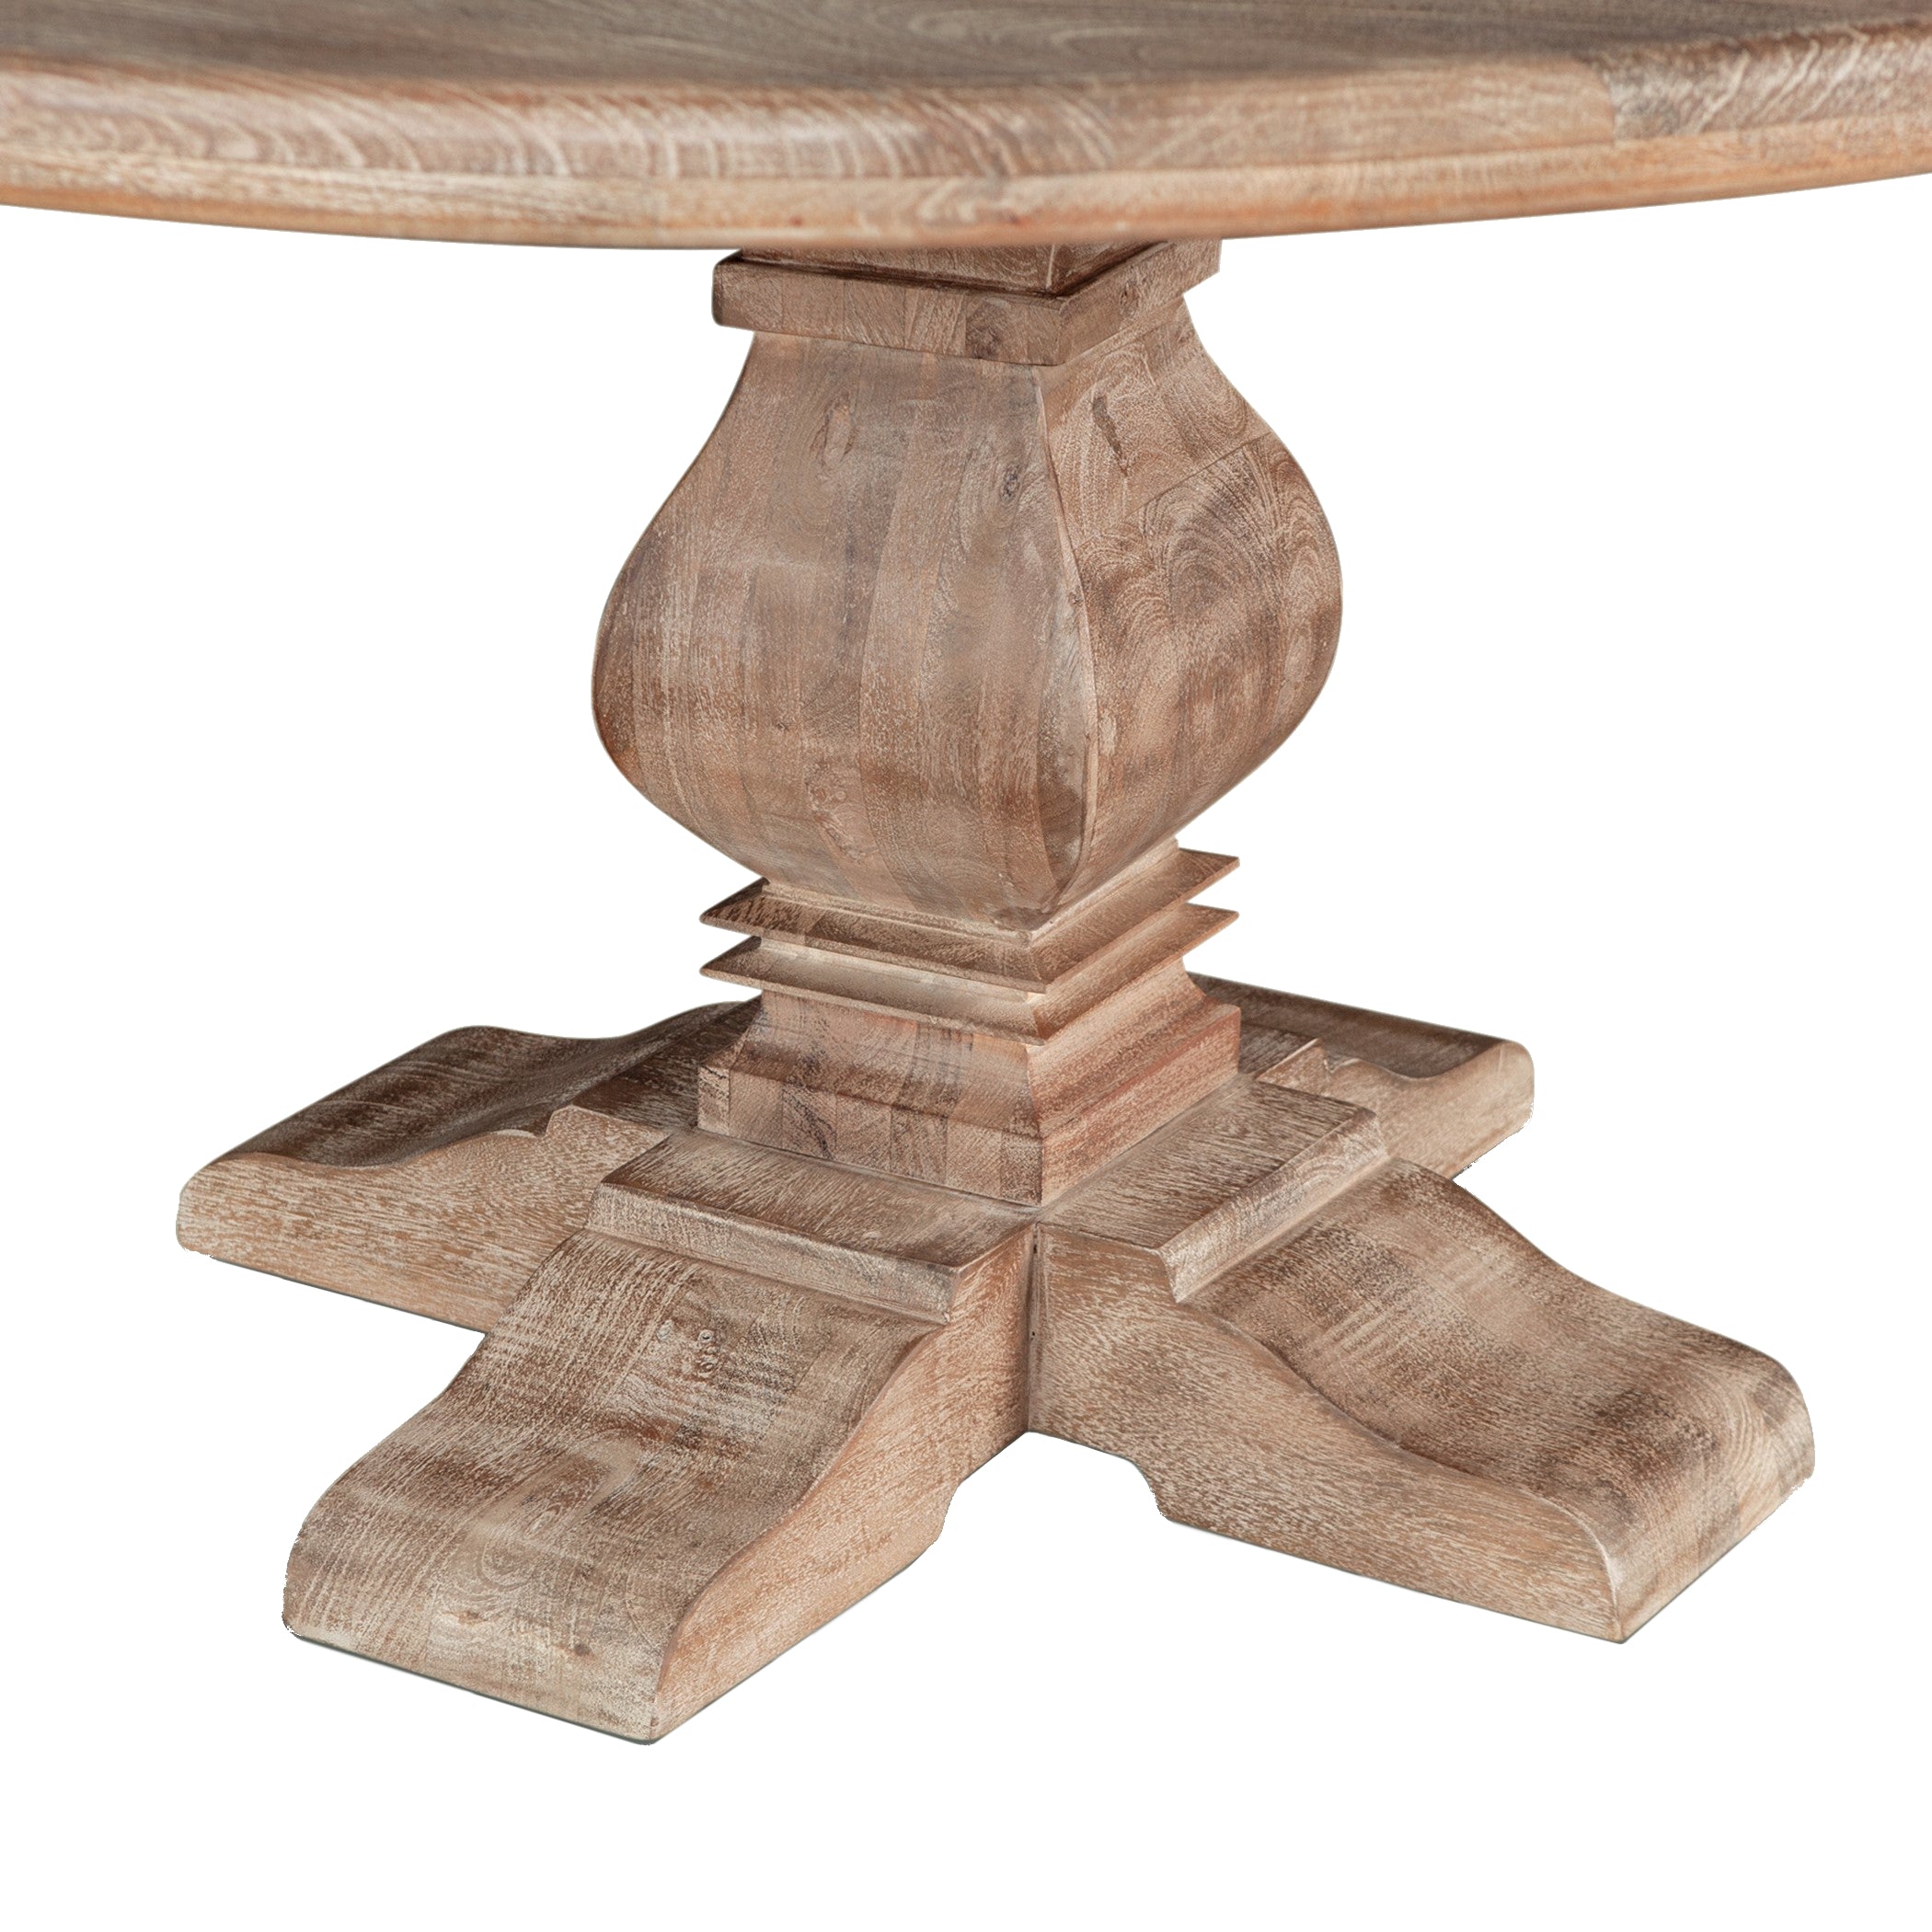 Pengrove Mango Wood Round Dining Table - Pedestal Closeup